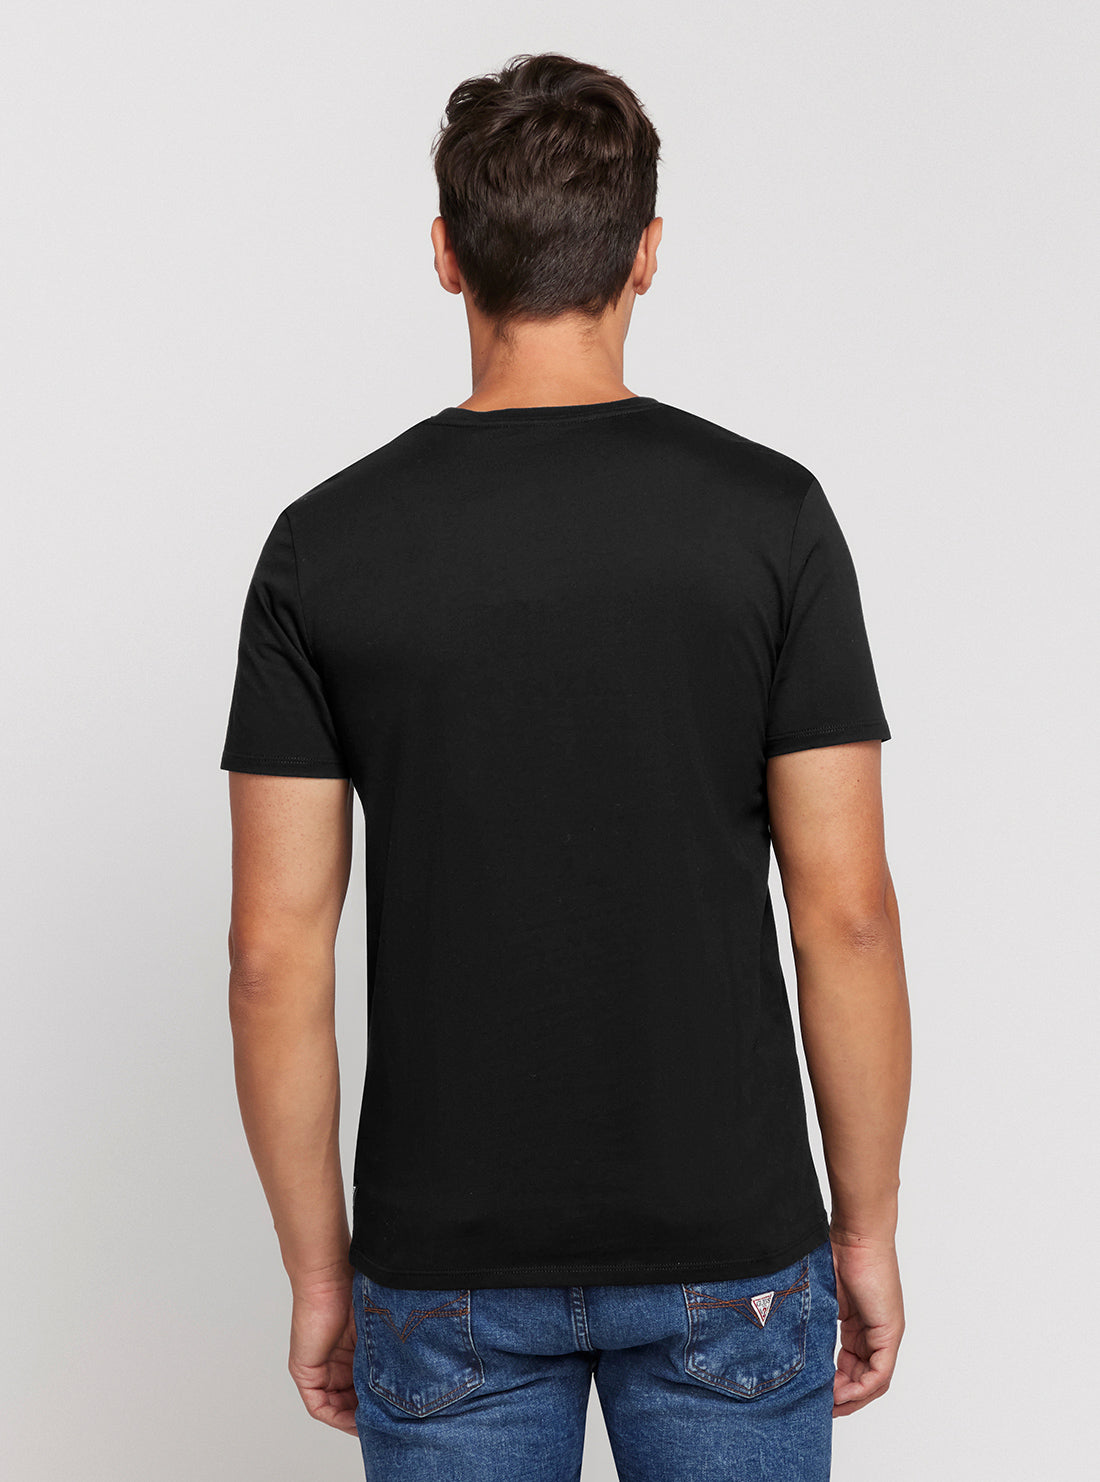 GUESS Eco Black Short Sleeve T-Shirt back view